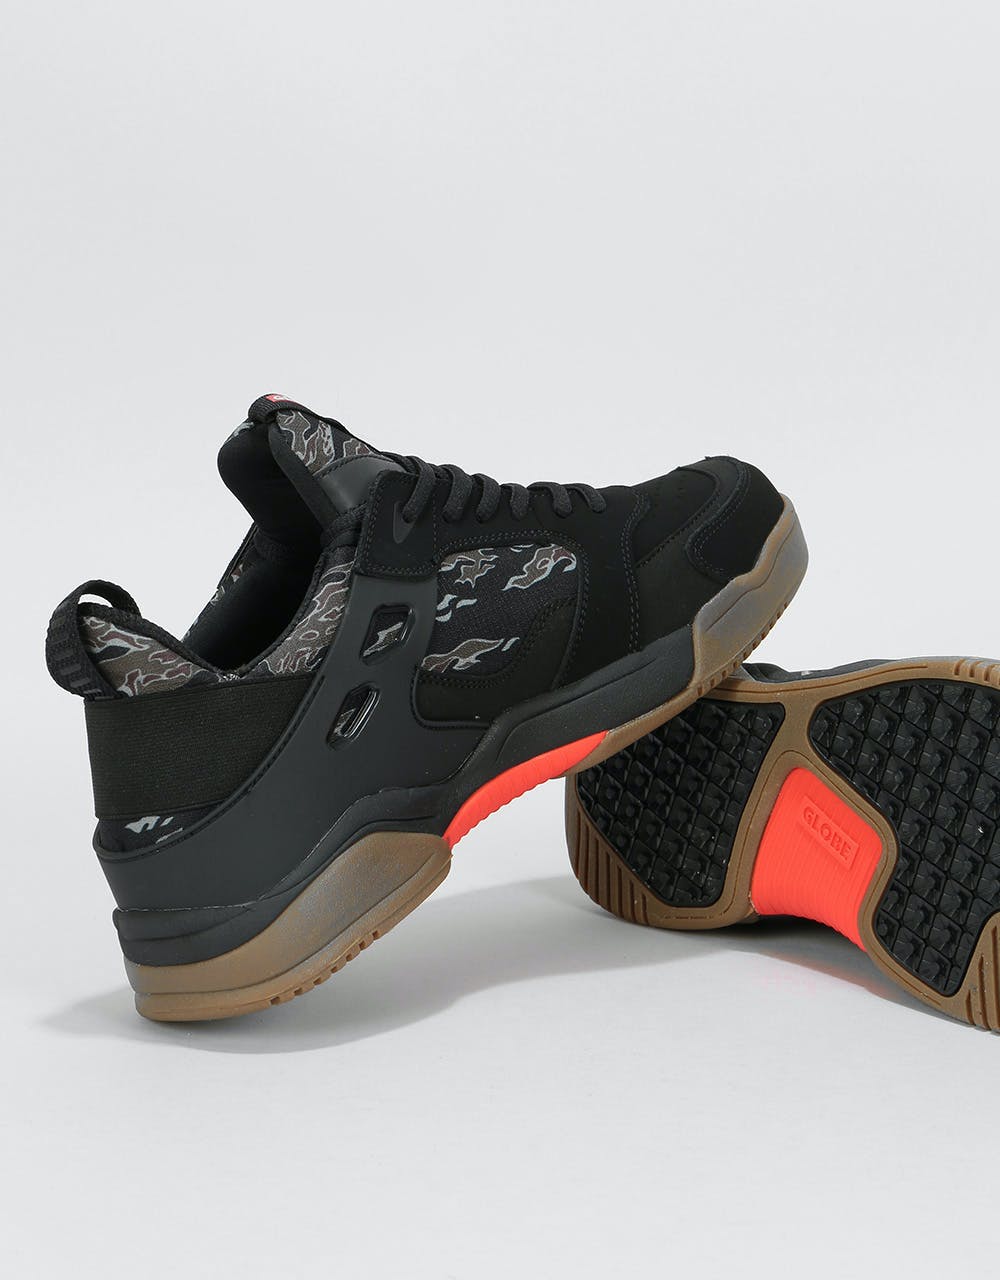 Globe Tilt Evo Skate Shoes - Black/Tiger Camo